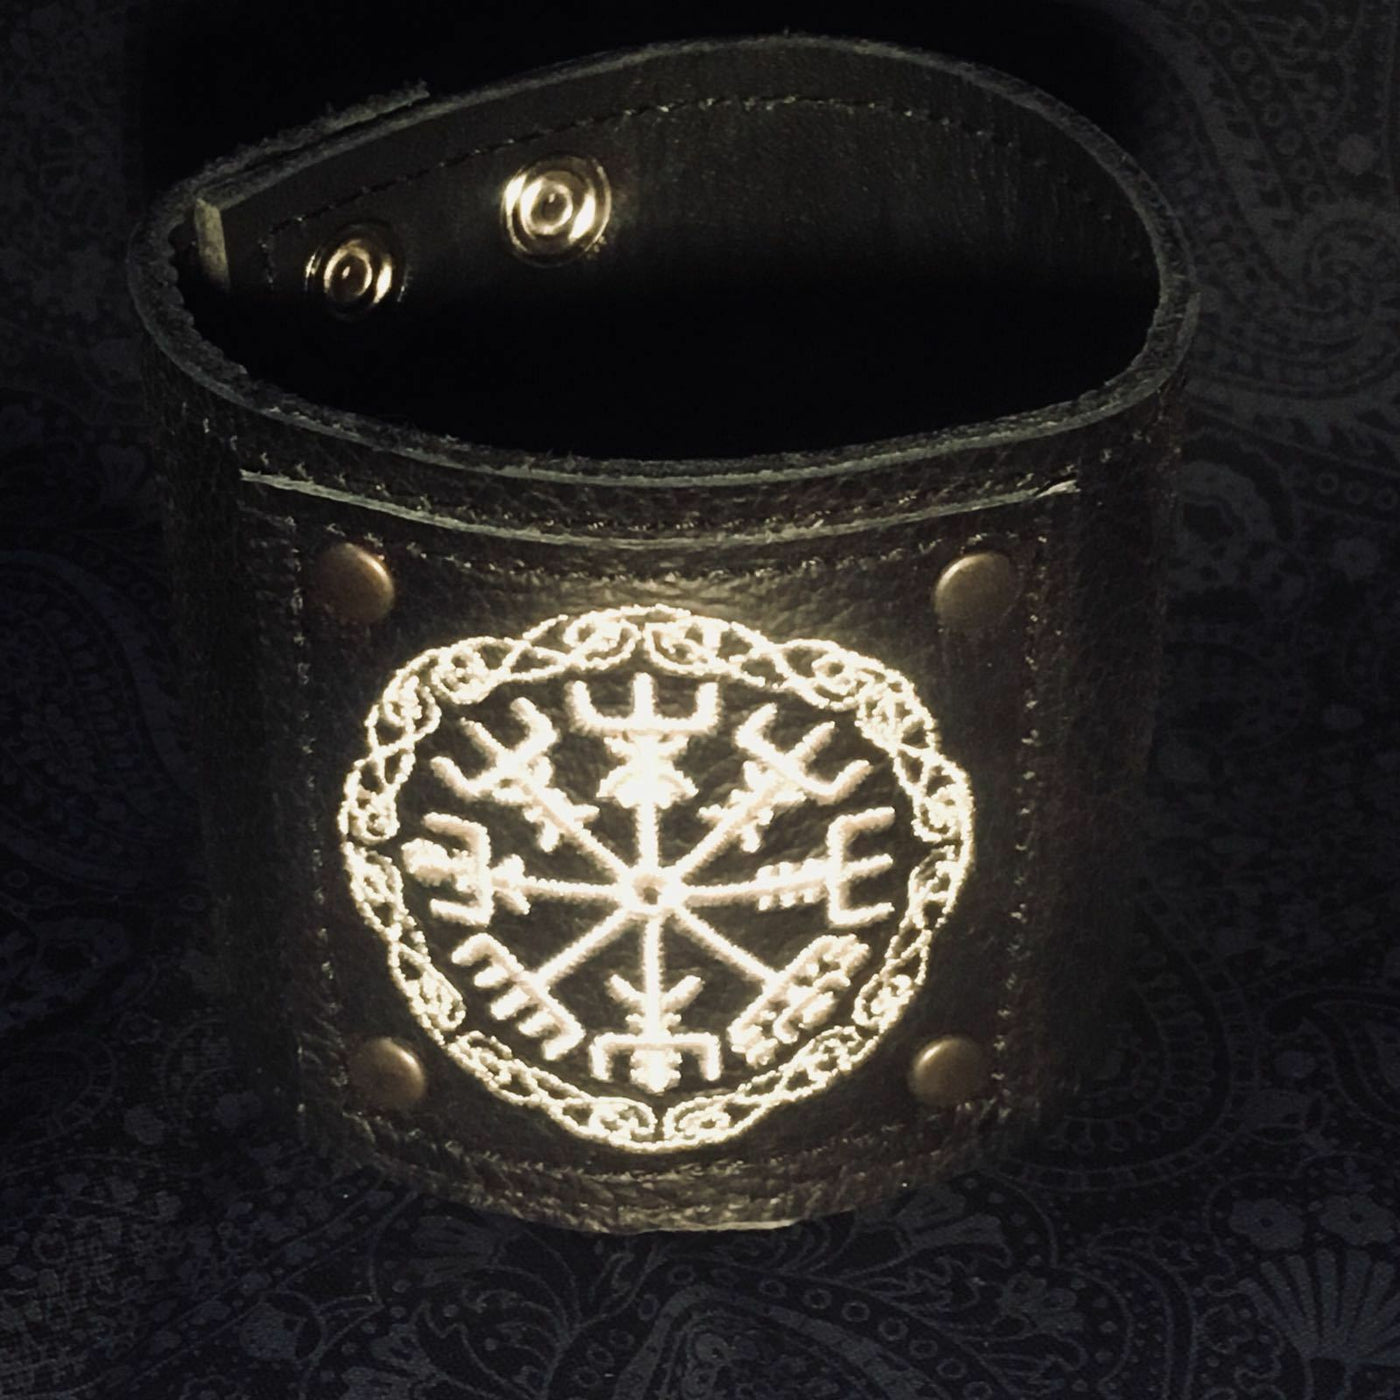 Leather Nordic Compass vegvisir wrist cuff wristband Viking Odin Thor archery